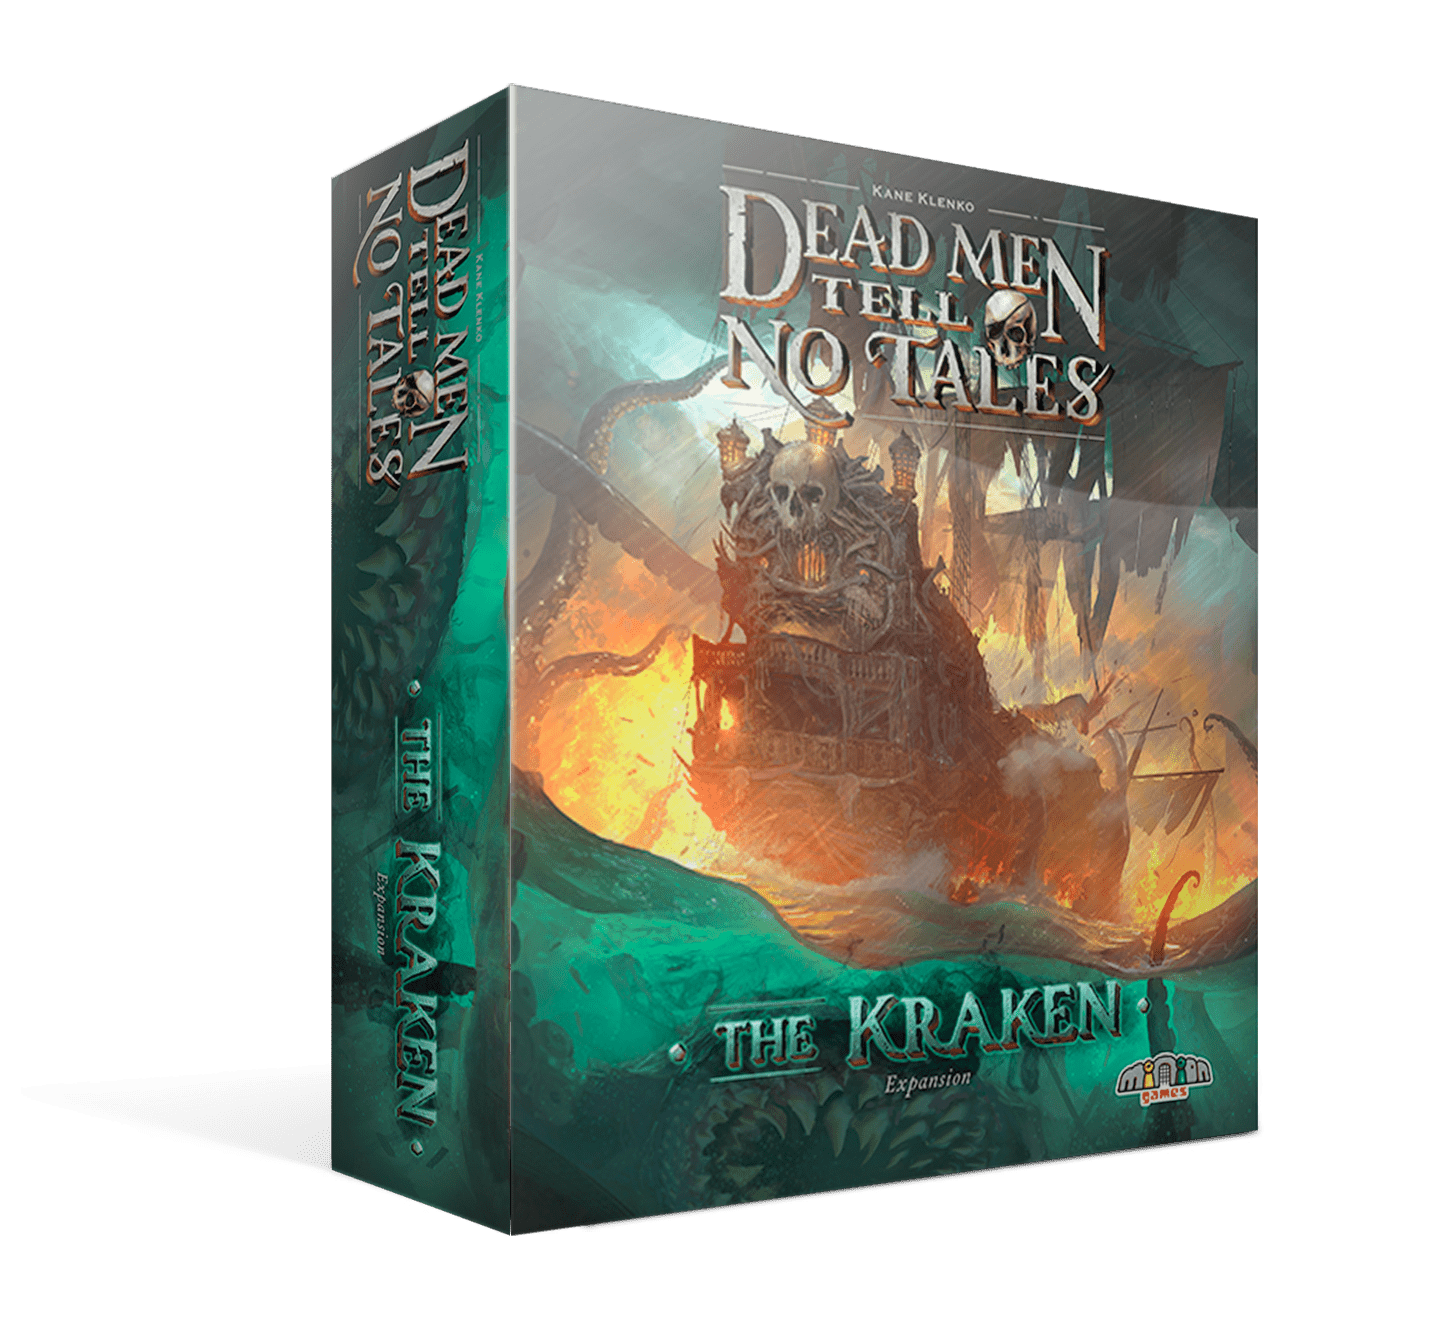 Dead Men Tell No Tales: The Kraken